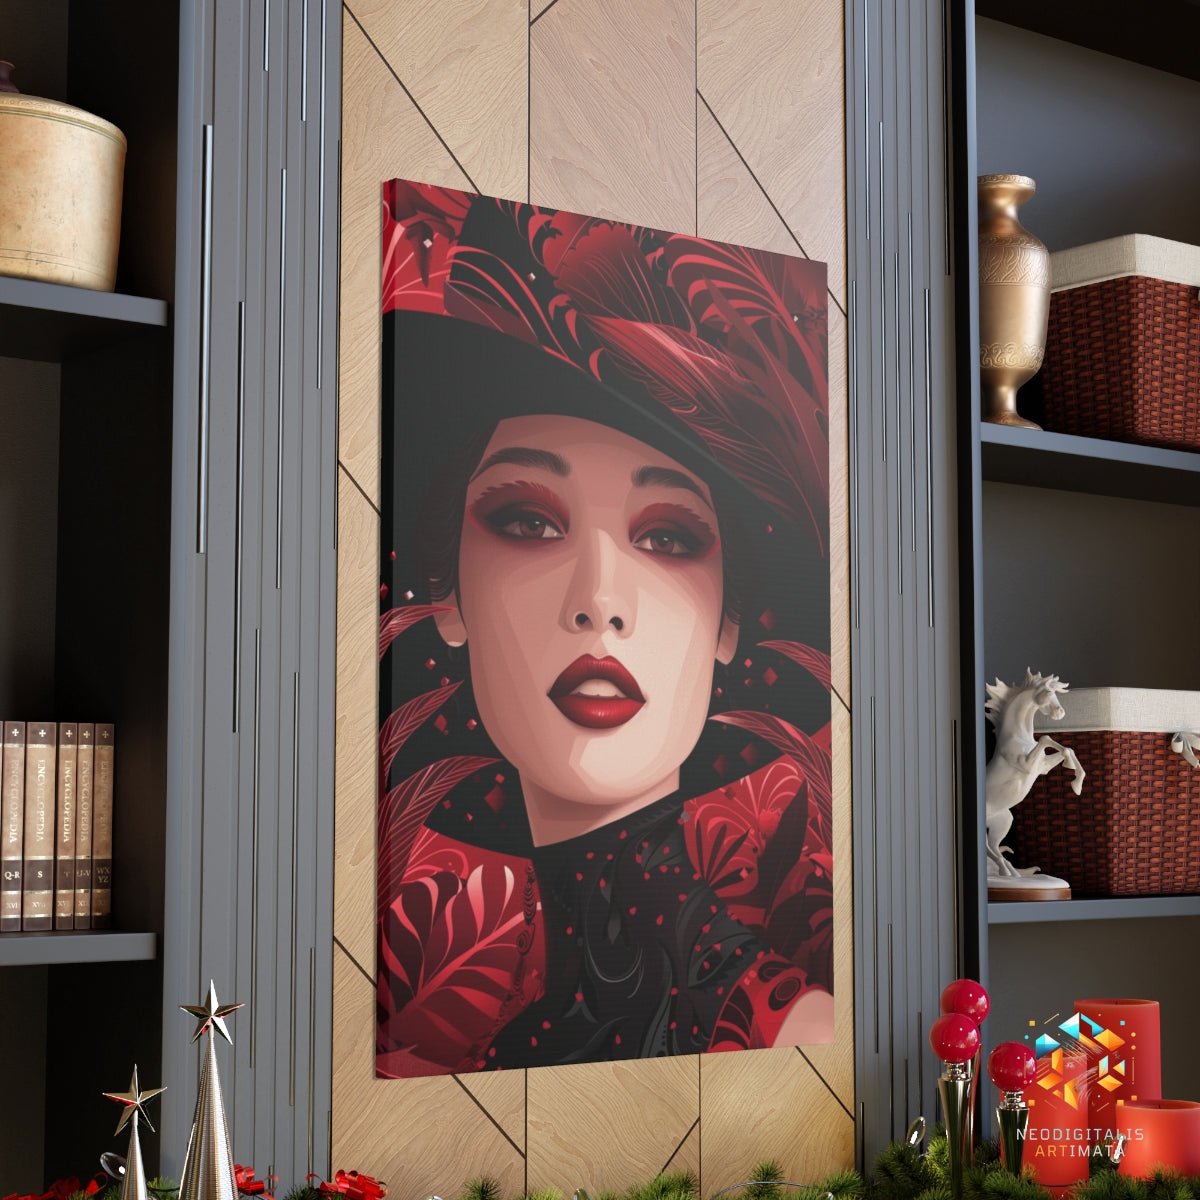 Crimson Elegance Portrait - Original Art Deco Style Portrait Wall Art - NeoDIGITALis ARTimata